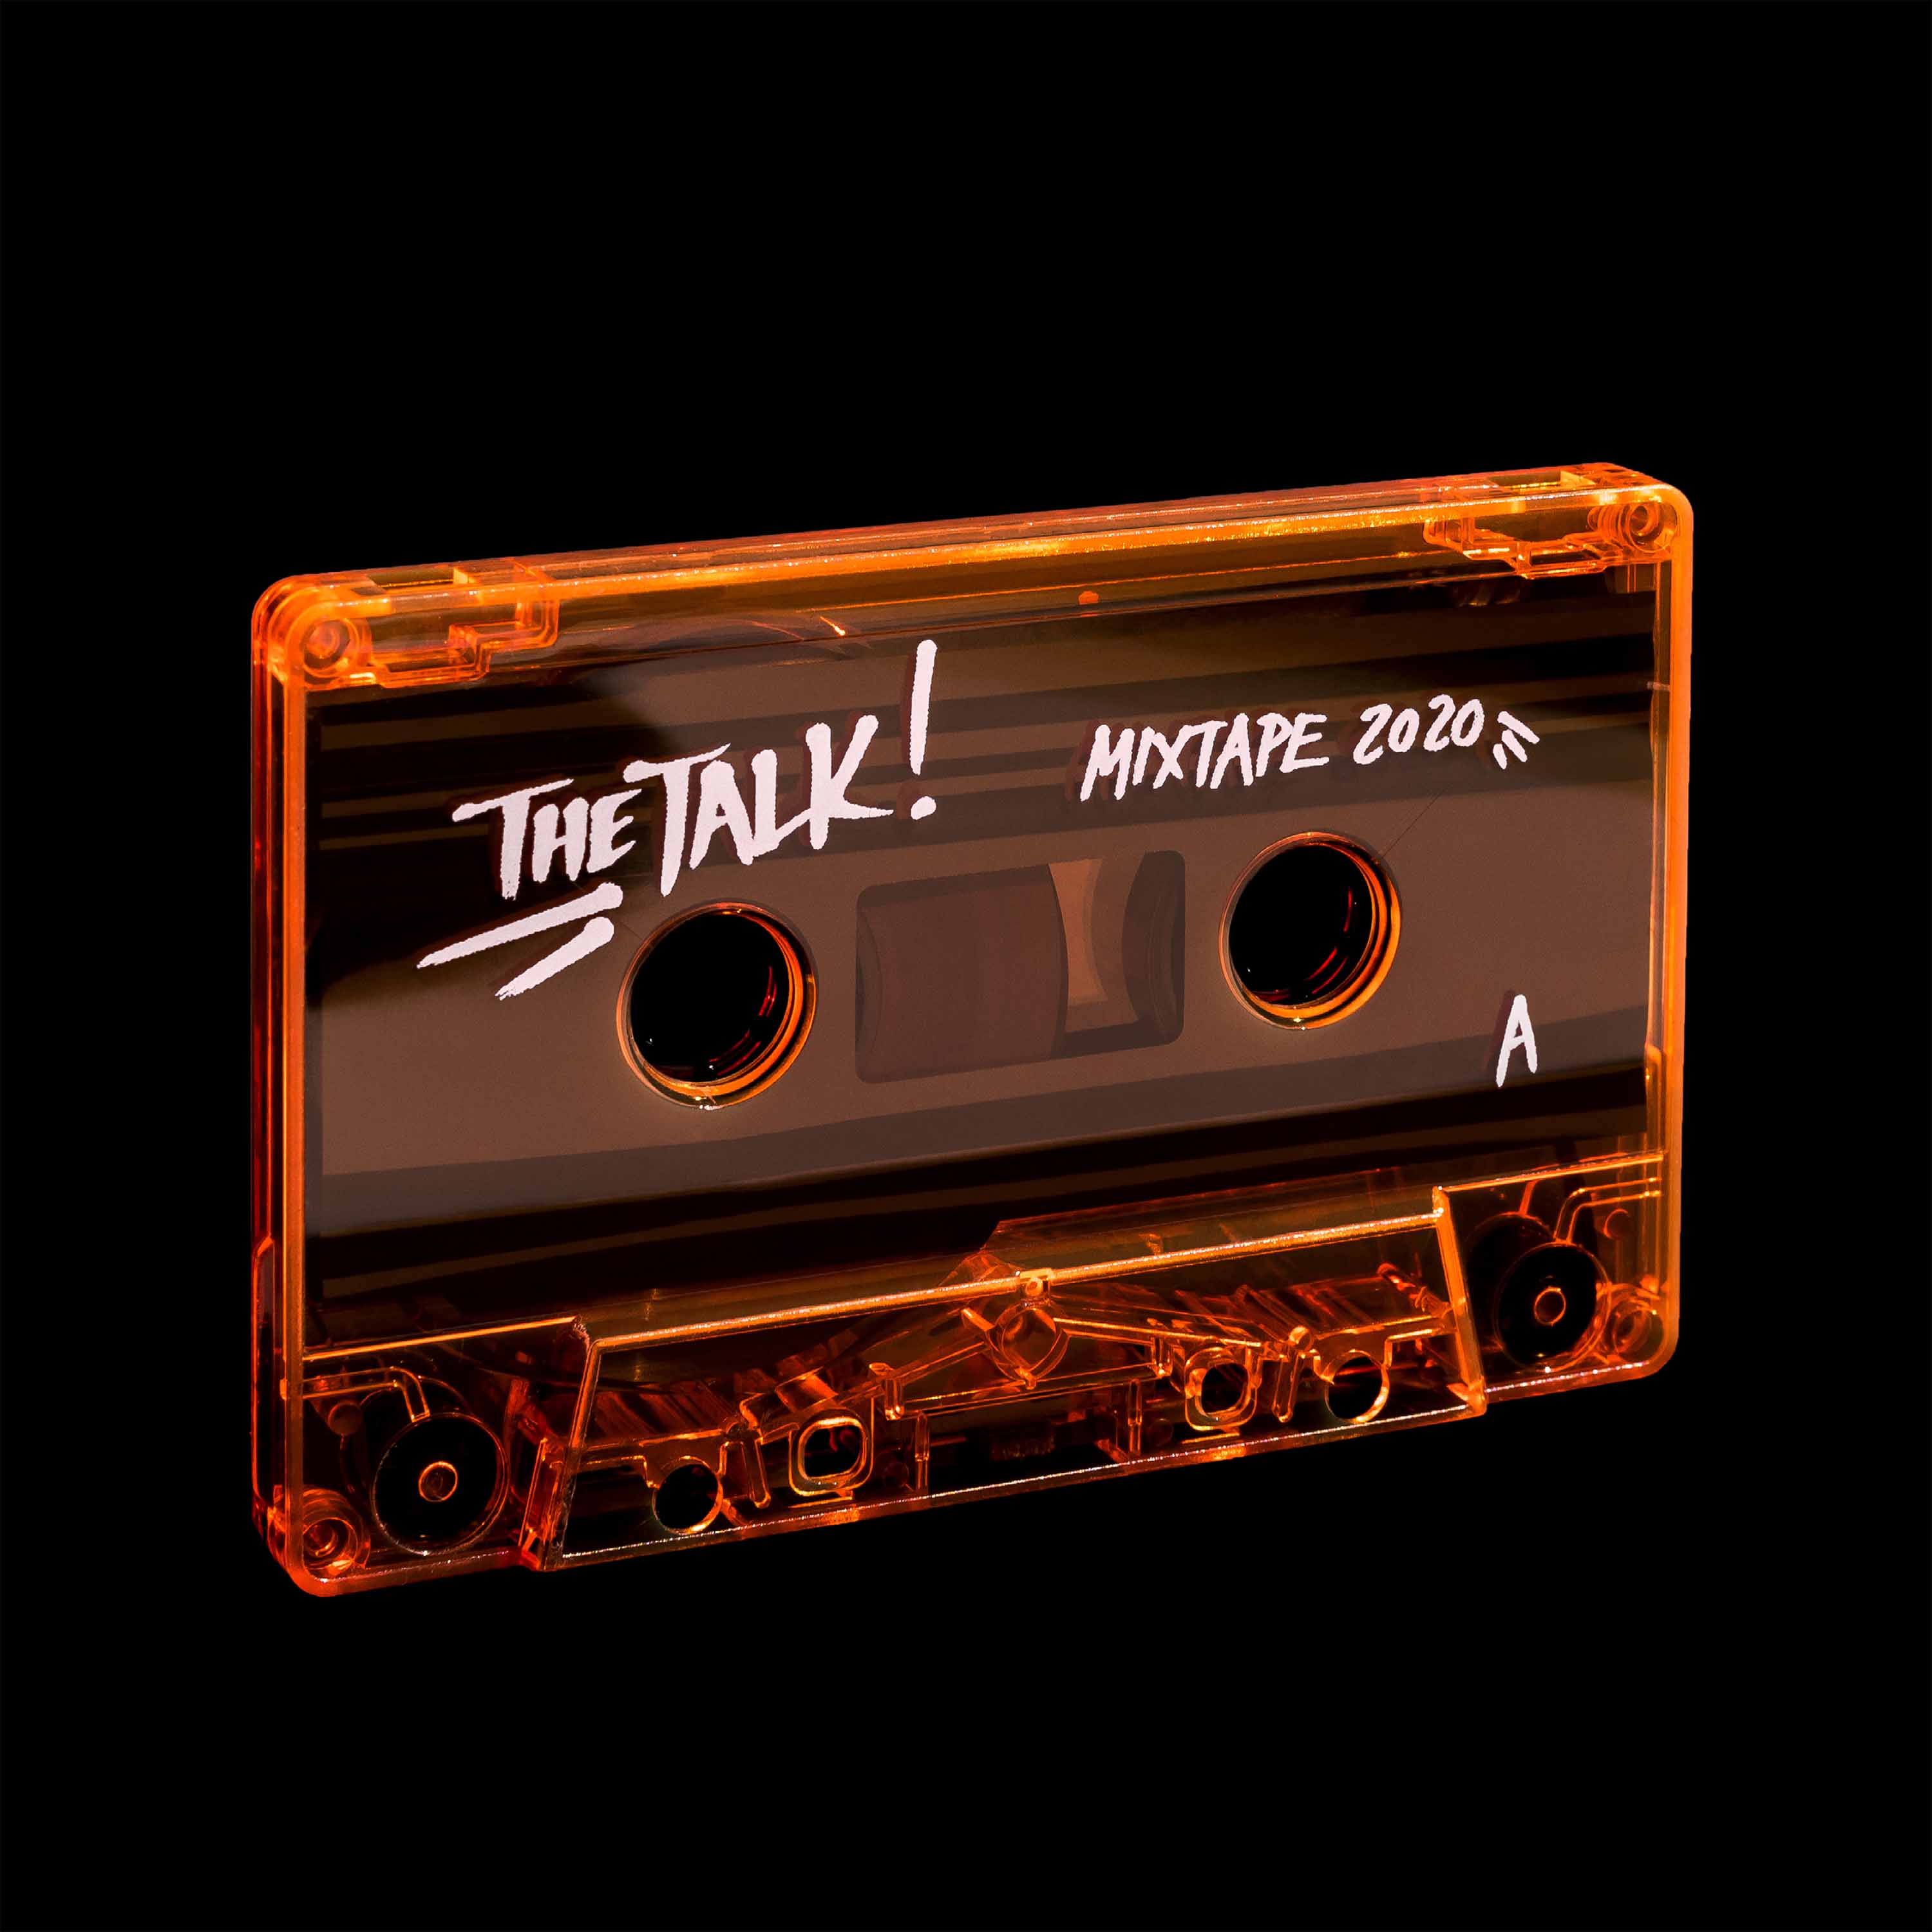 The Talk! Mixtape 2020